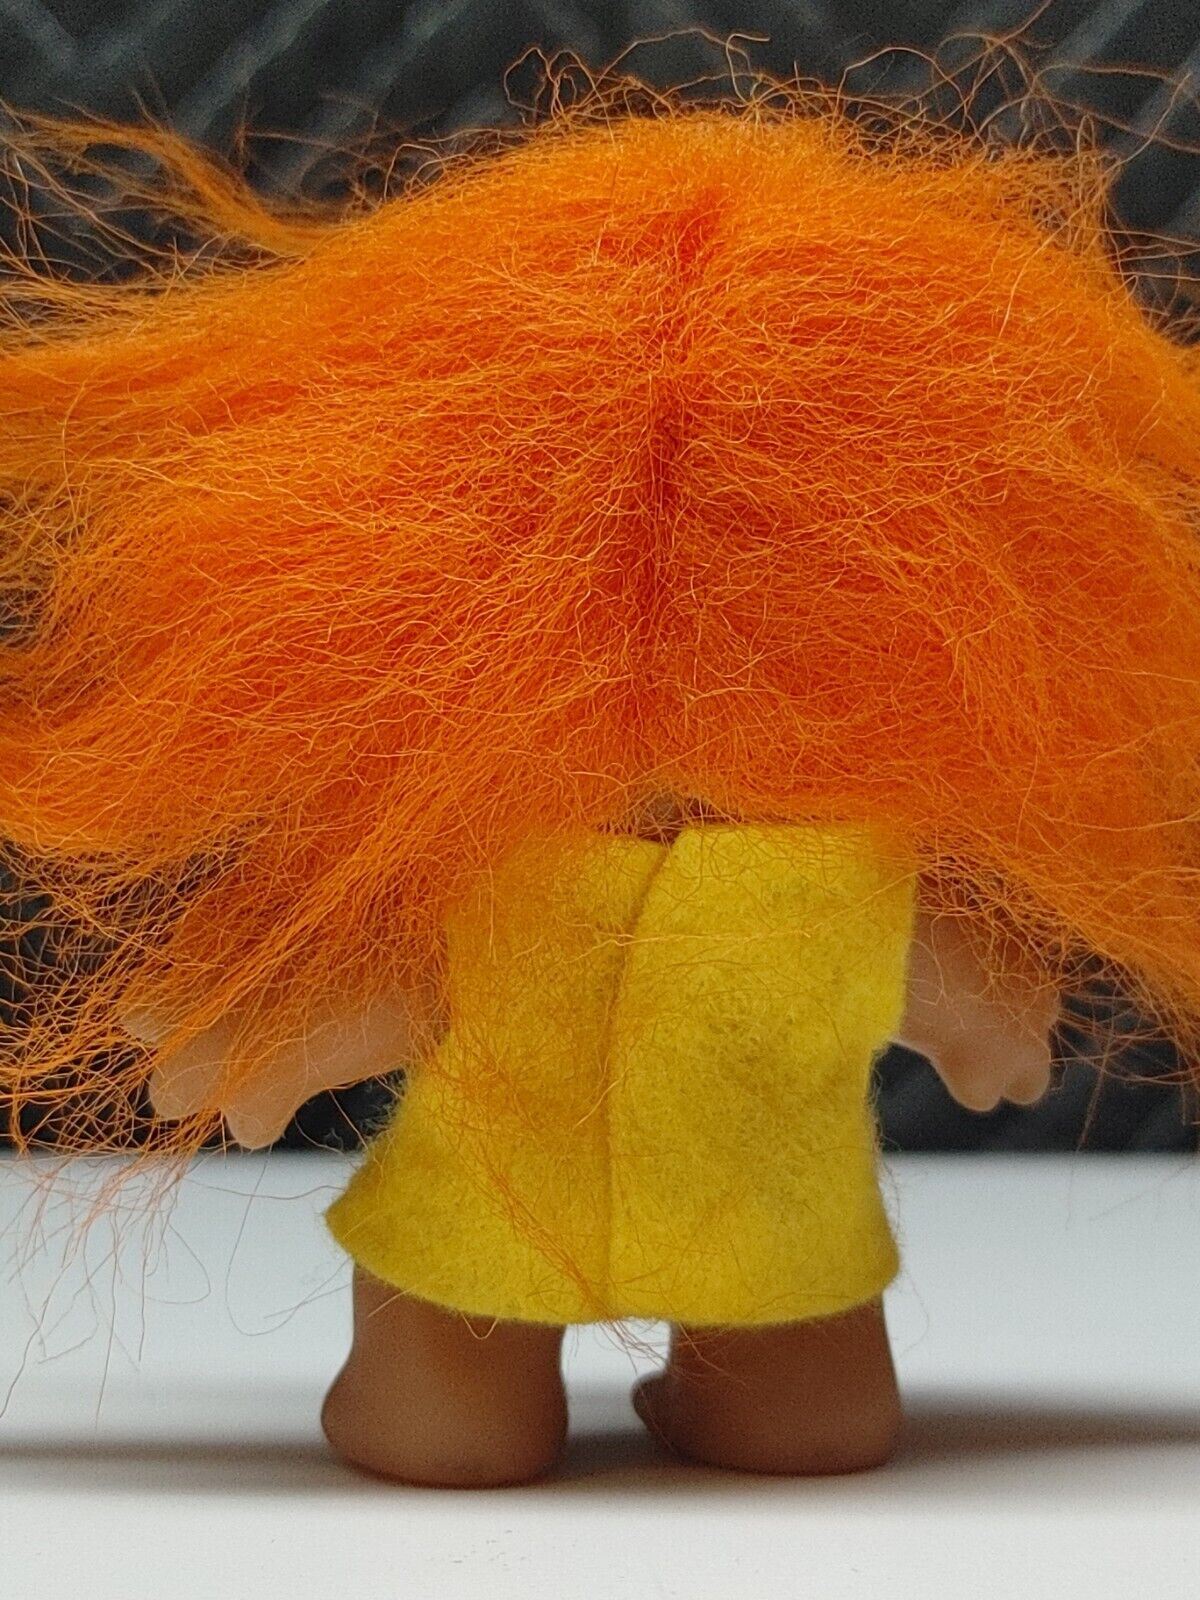 1965 DAM Things - Troll Doll w/ Orange Hair - Yellow Clothes 3" - All Orignal